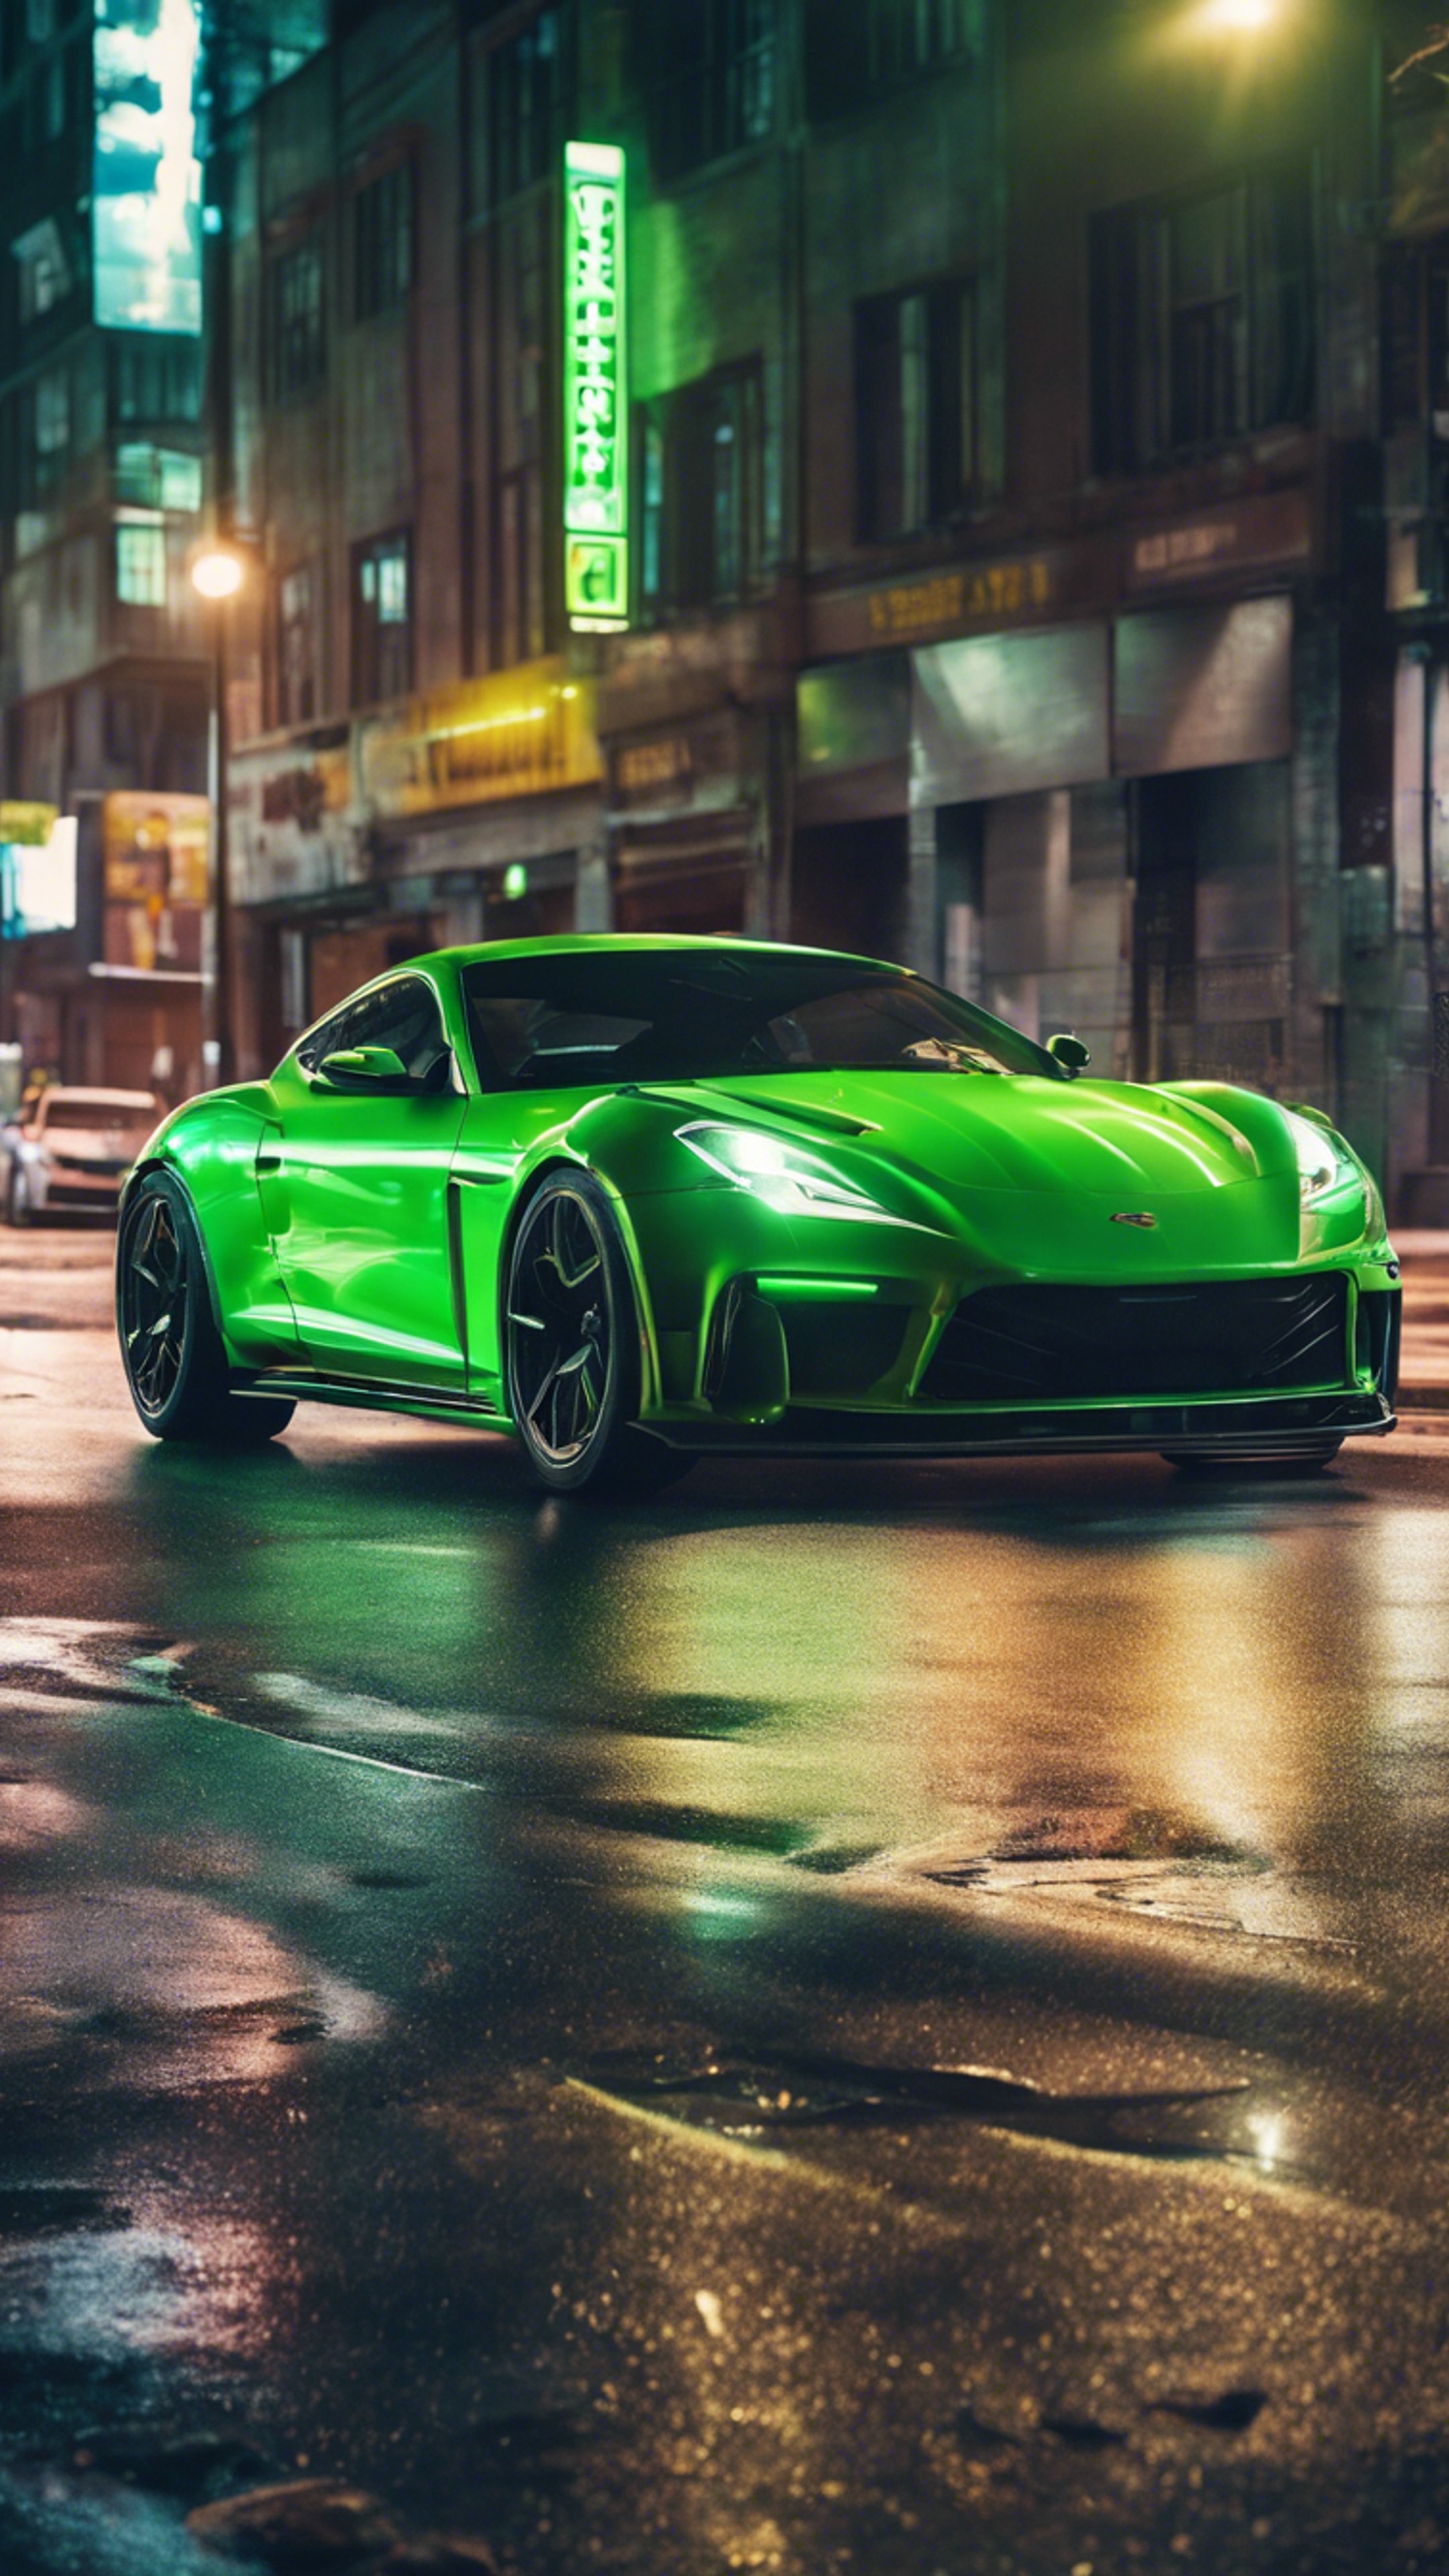 A cool neon green sports car racing down a city street at night. ផ្ទាំង​រូបភាព[ff2aa681813144c0b5f6]